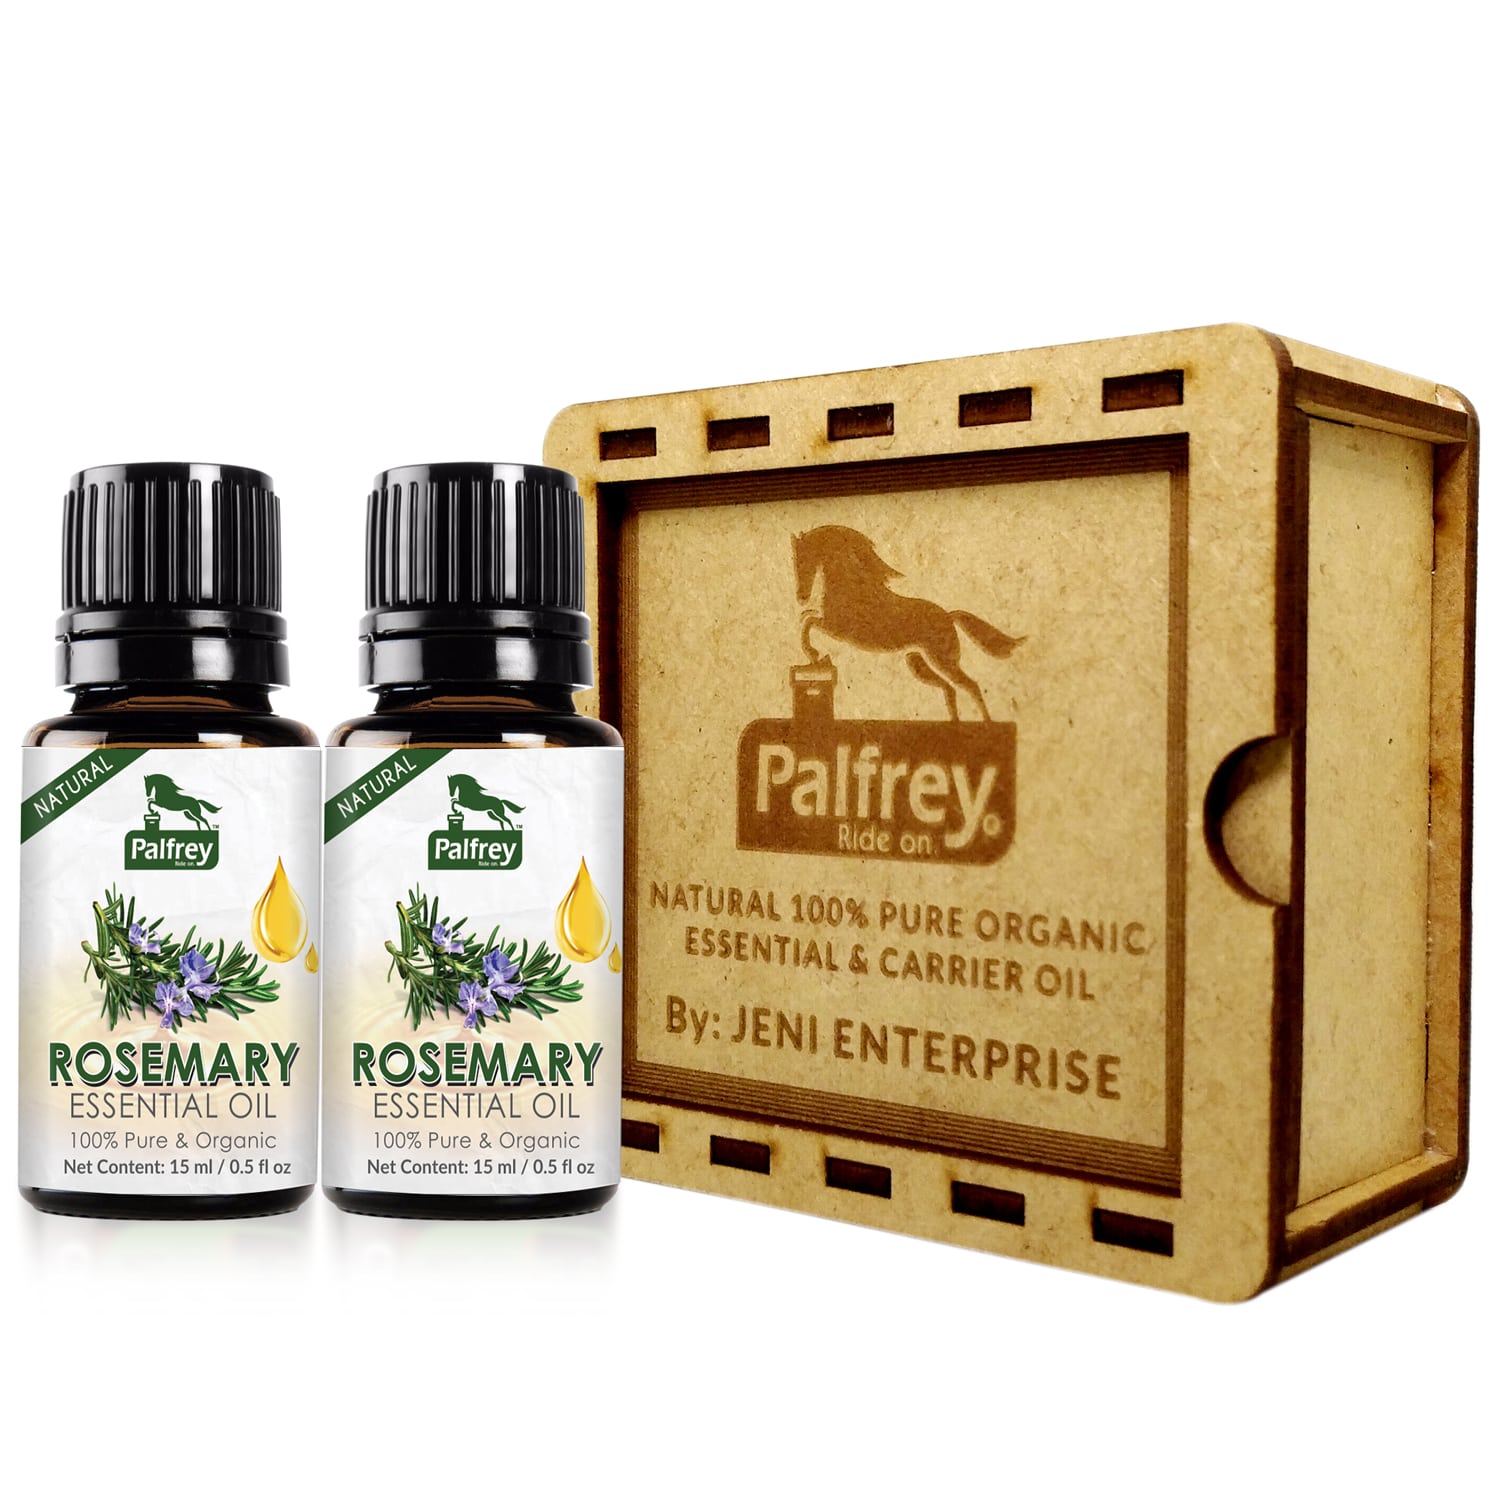 Palfrey 100% Pure Natural Organic Rosemary Essential Oil (15 ml x 2 = 30 ml)